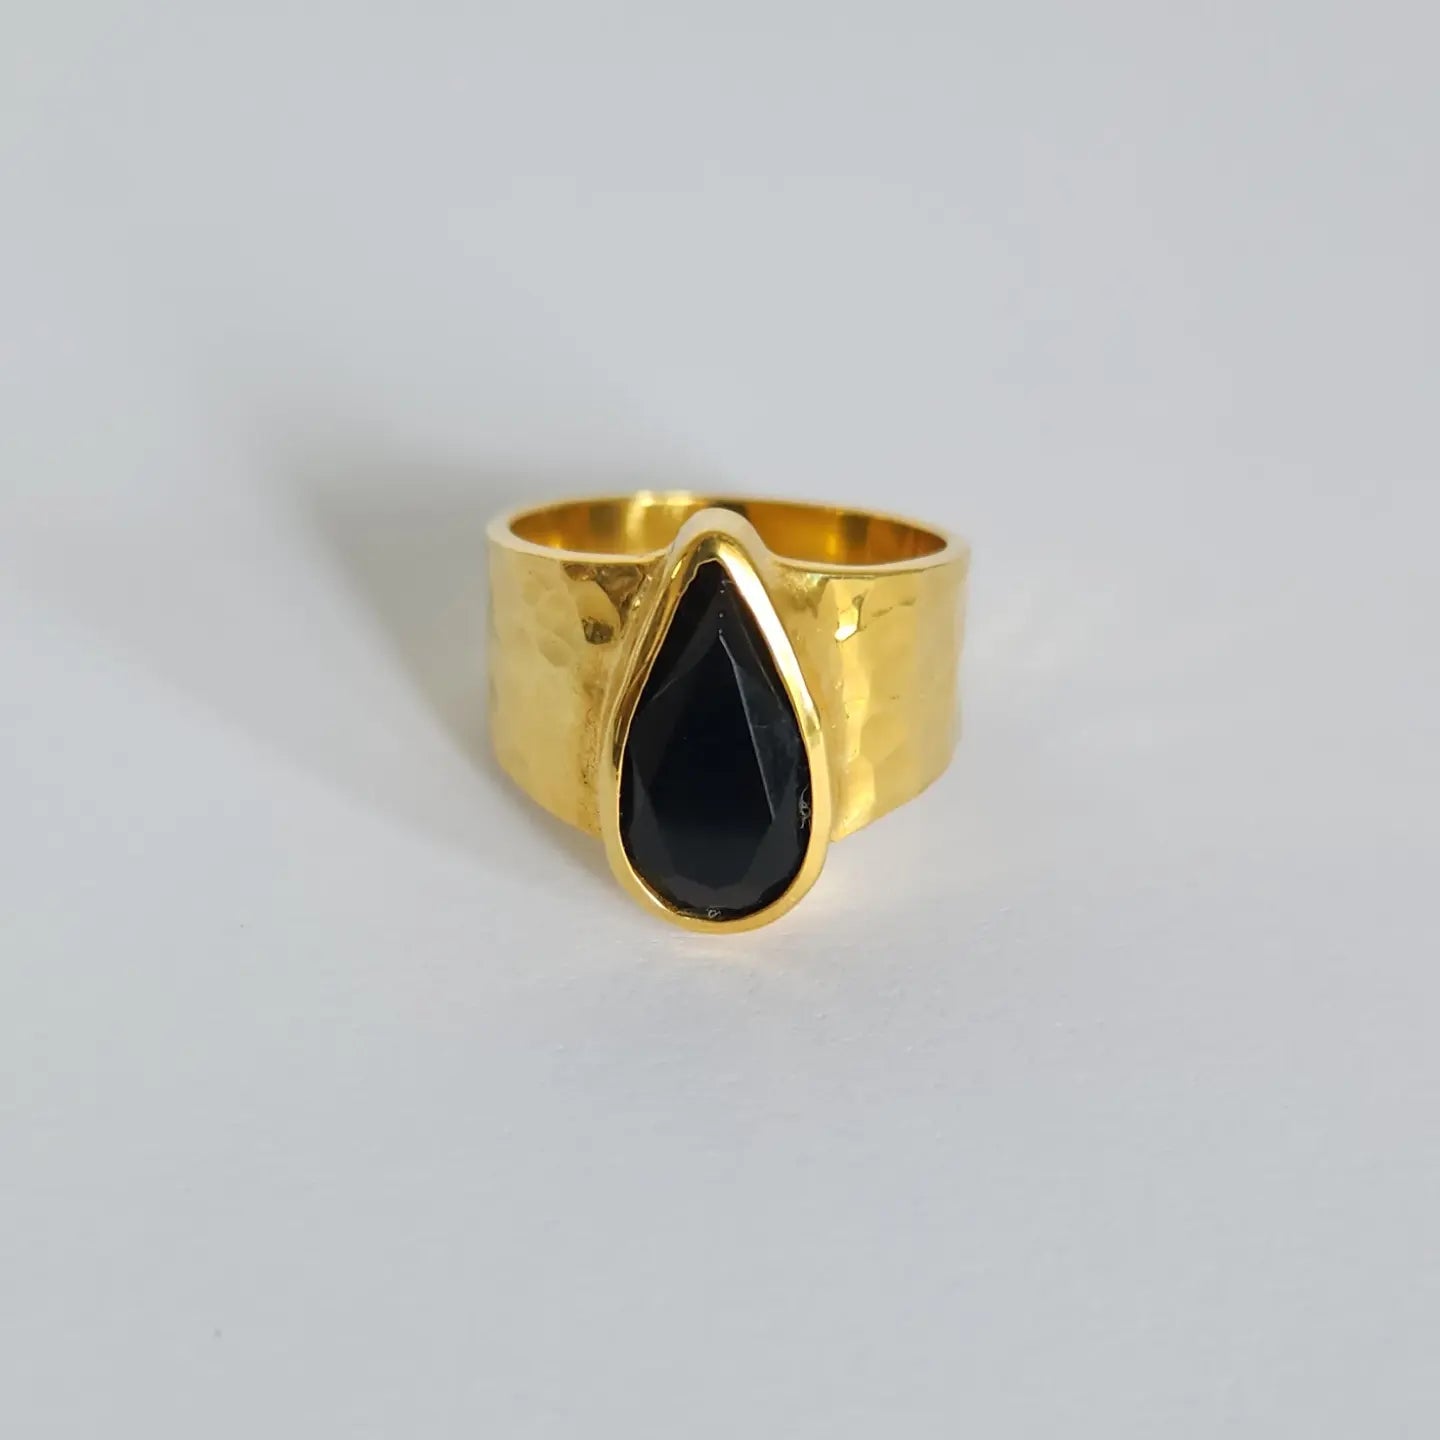 Mengani Ring Bali Silver 925 Gold Plated Black Onyx Stone